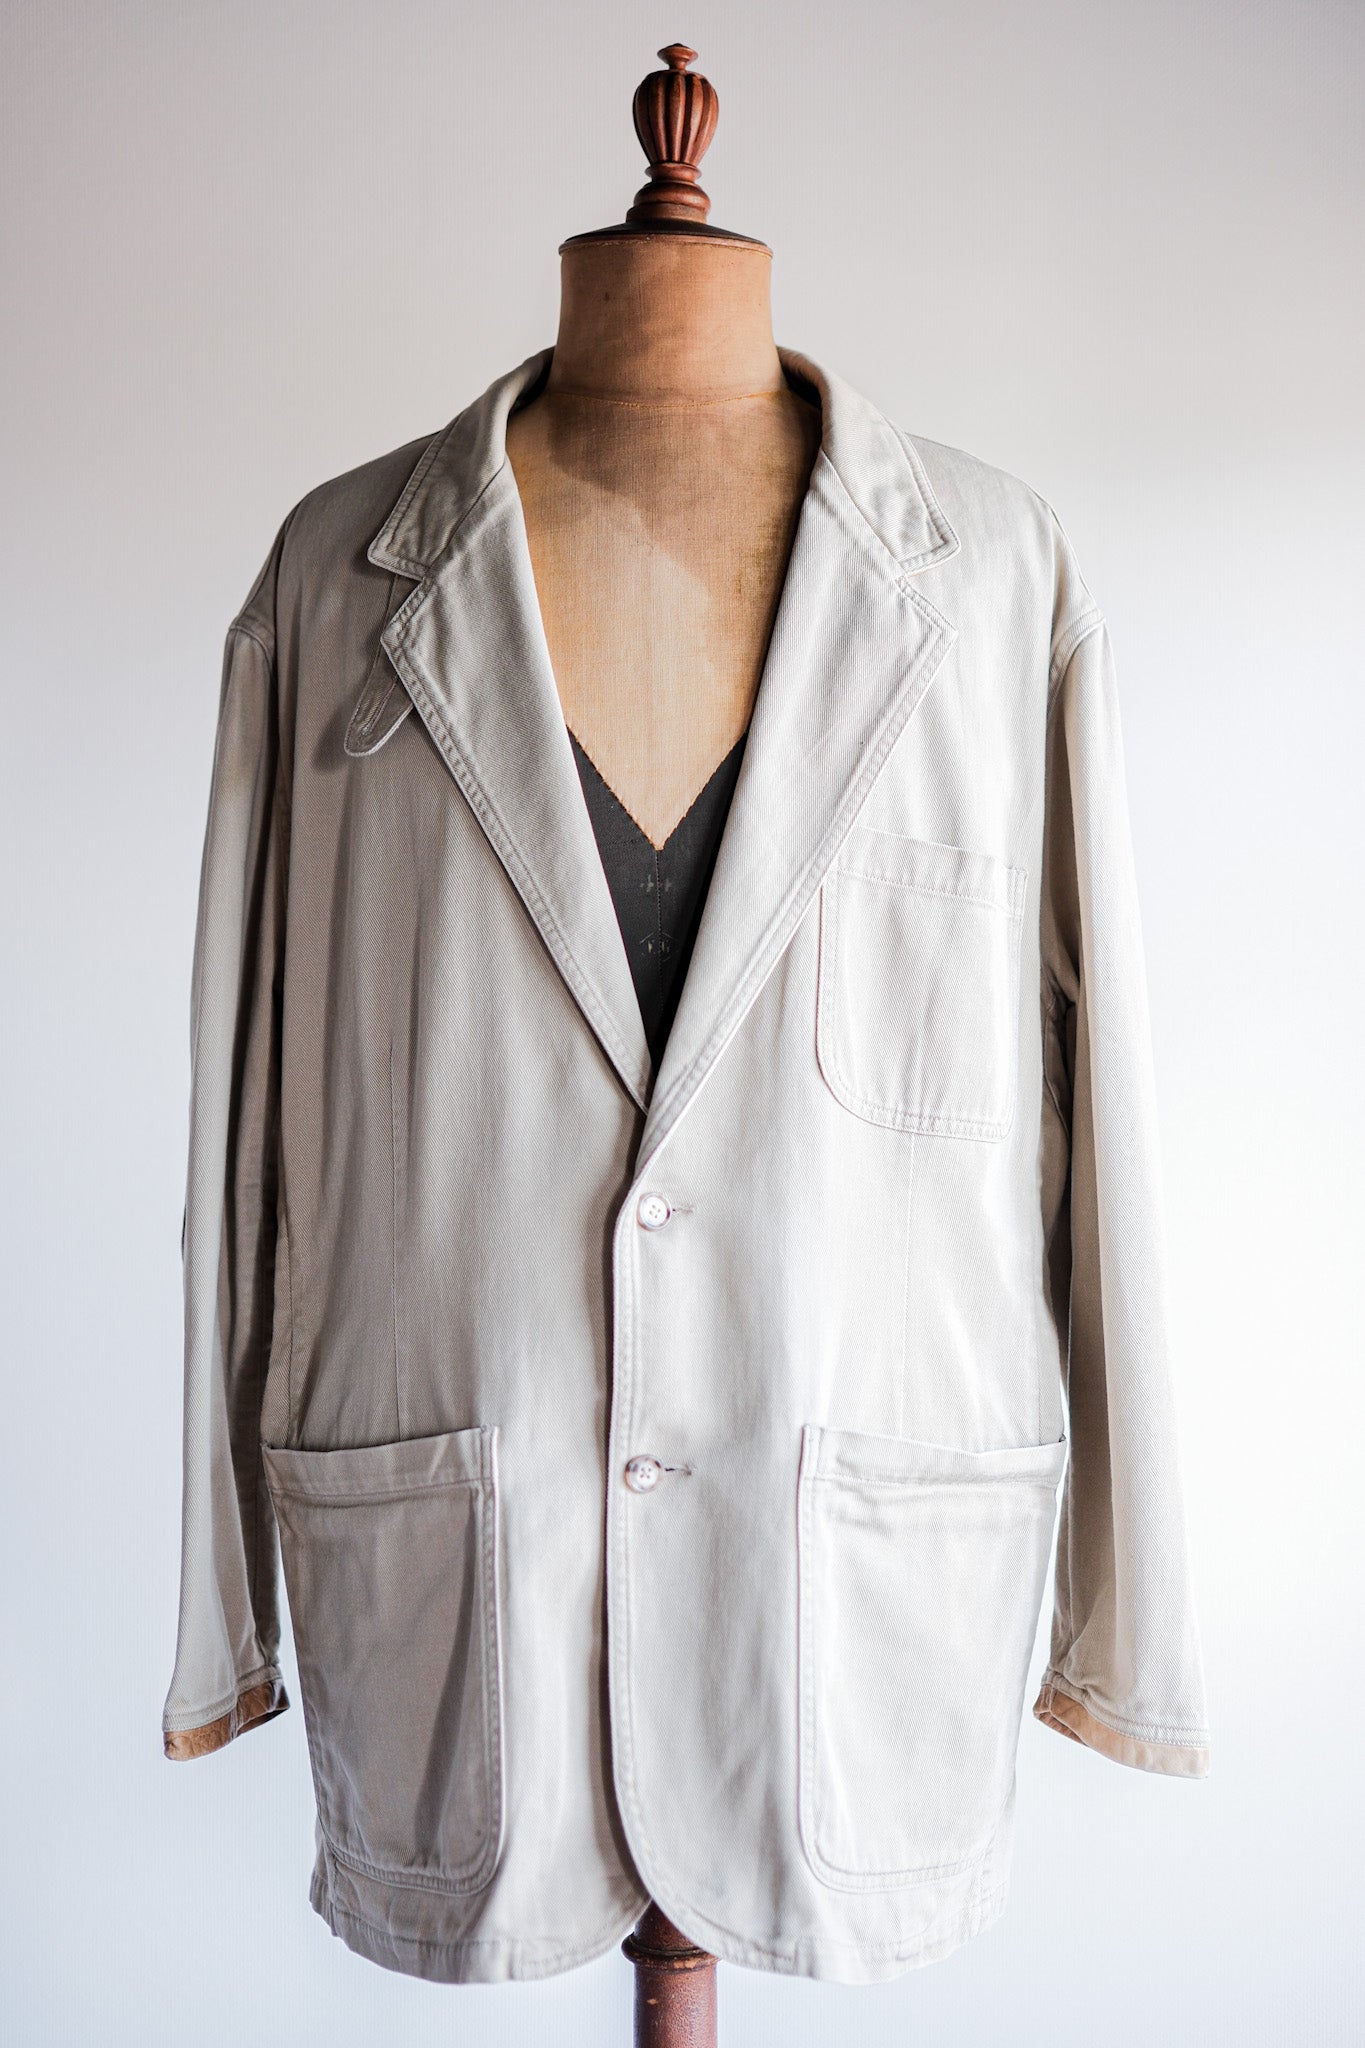 [~90's]Willis&Geiger Cotton Safari Jacket With Chin Strap Size.L